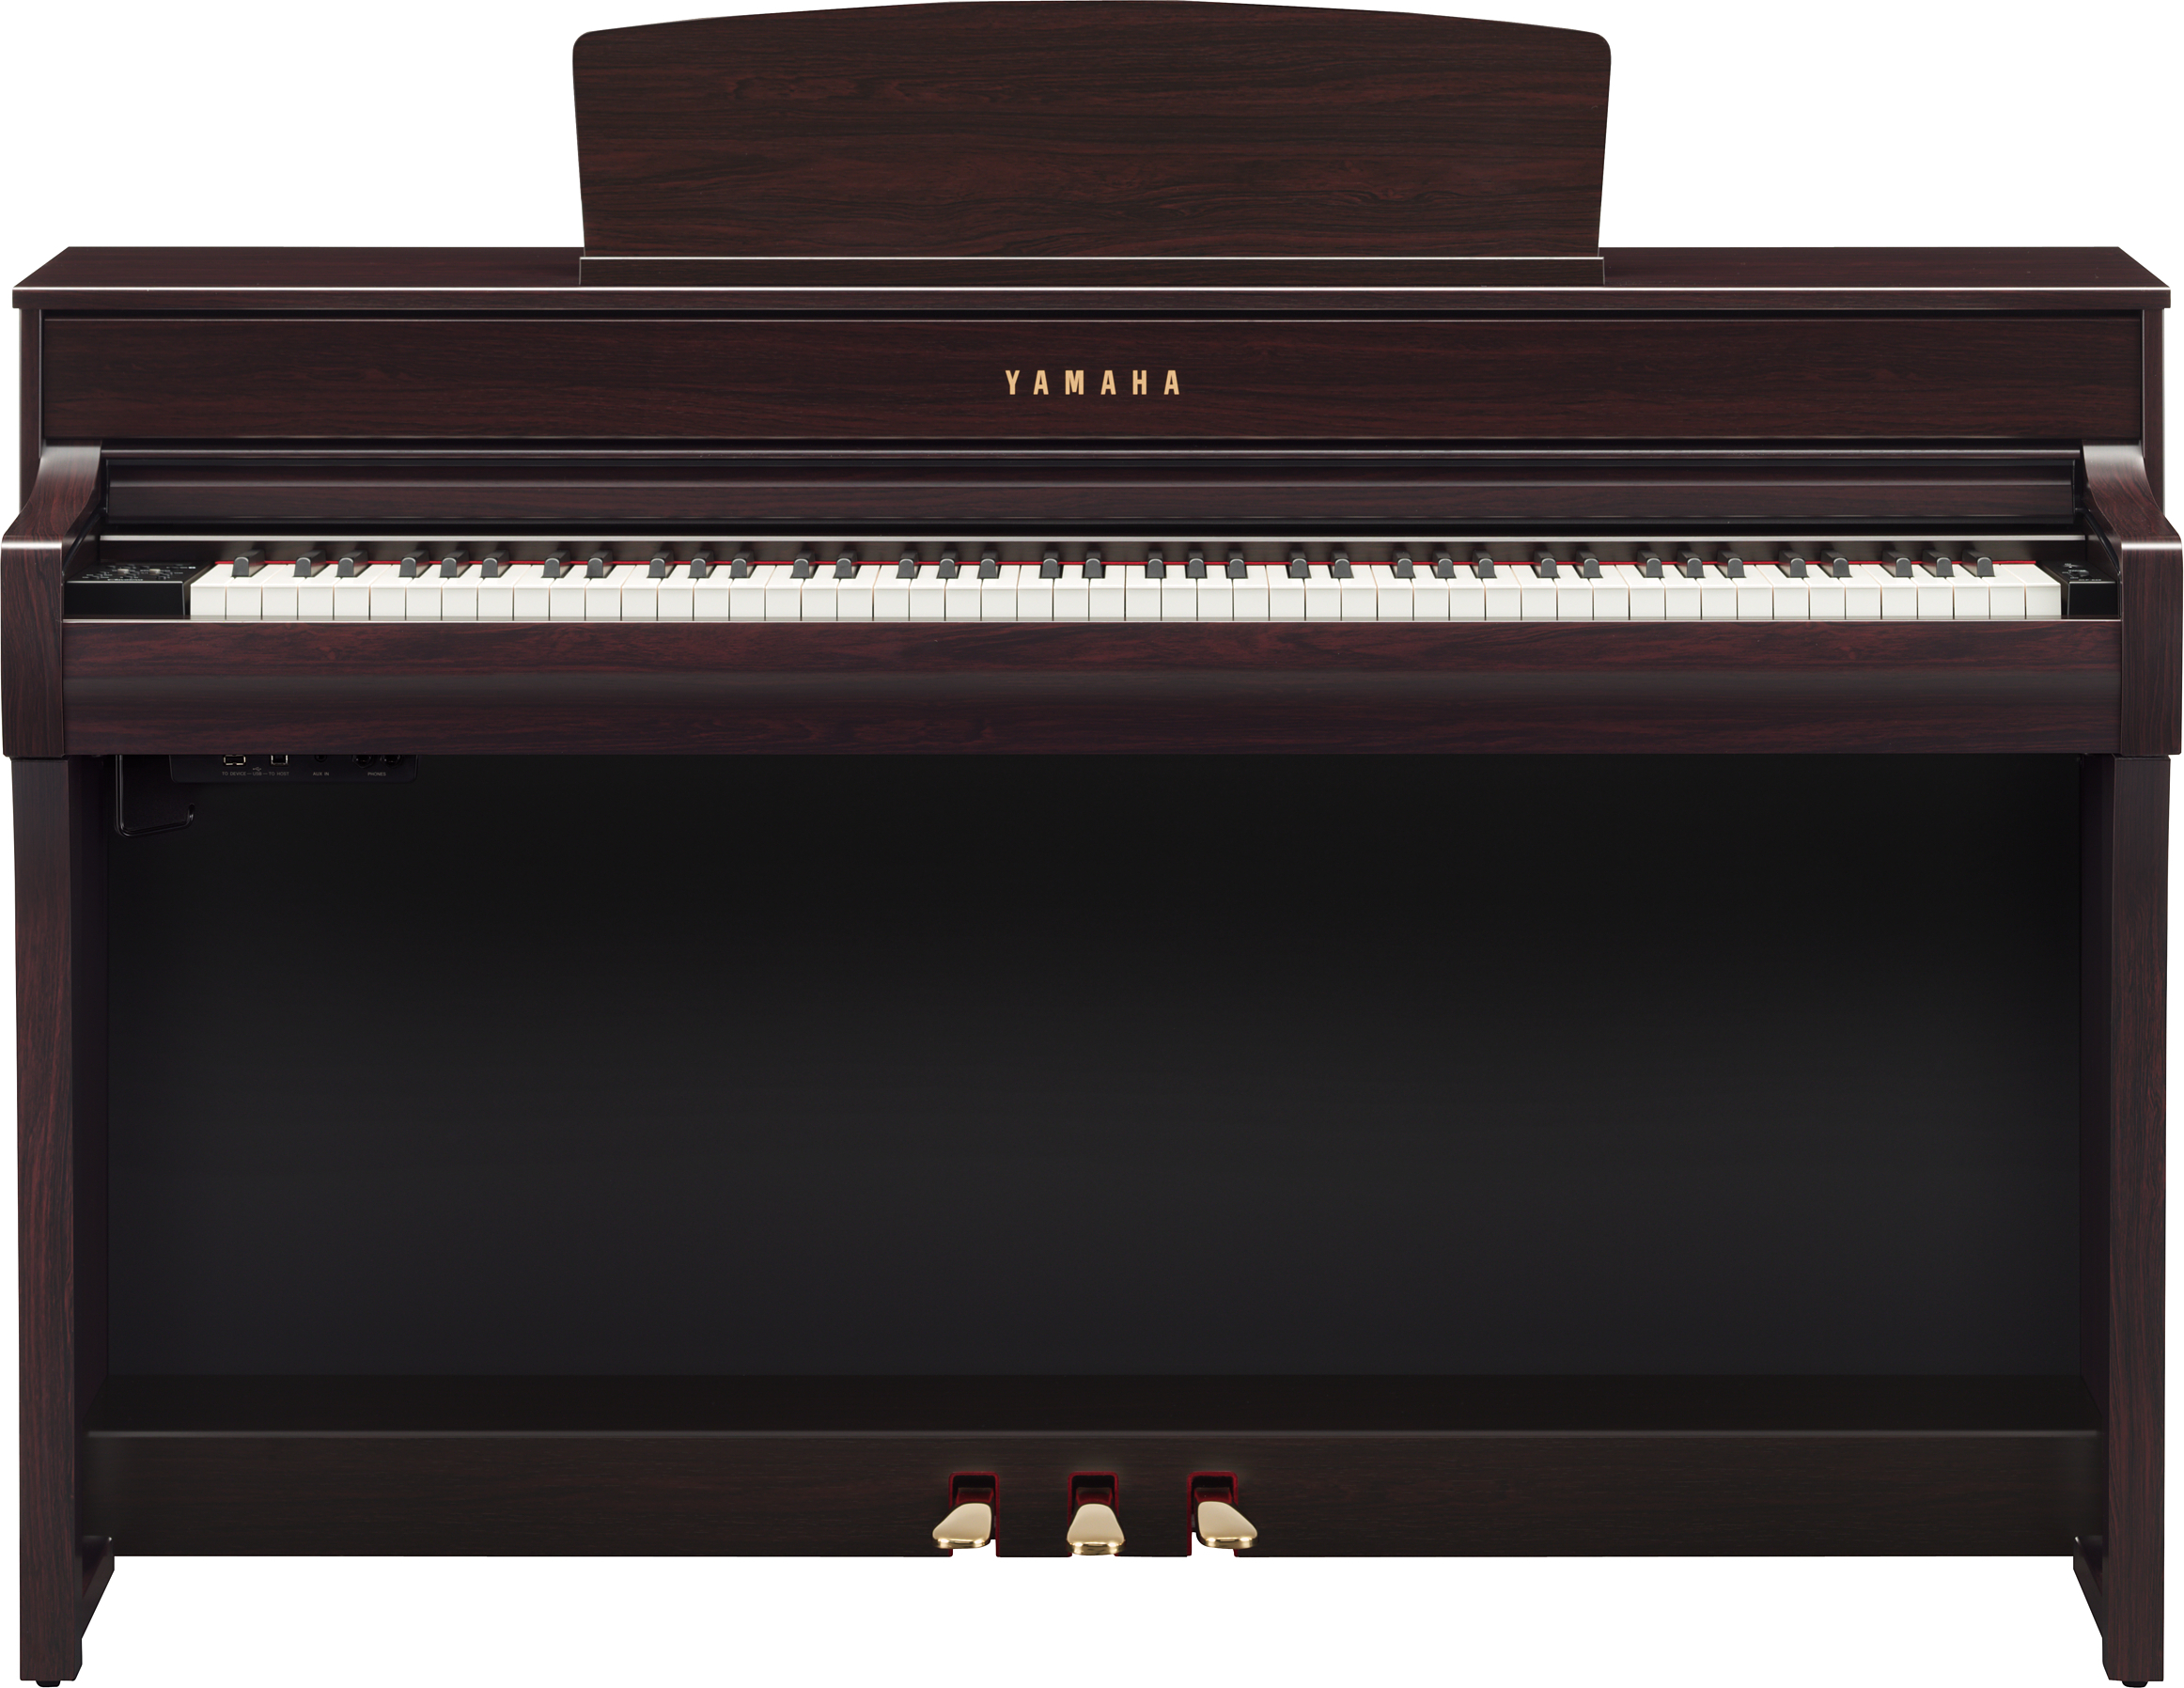 Yamaha Clp745r - Digitalpiano mit Stand - Main picture